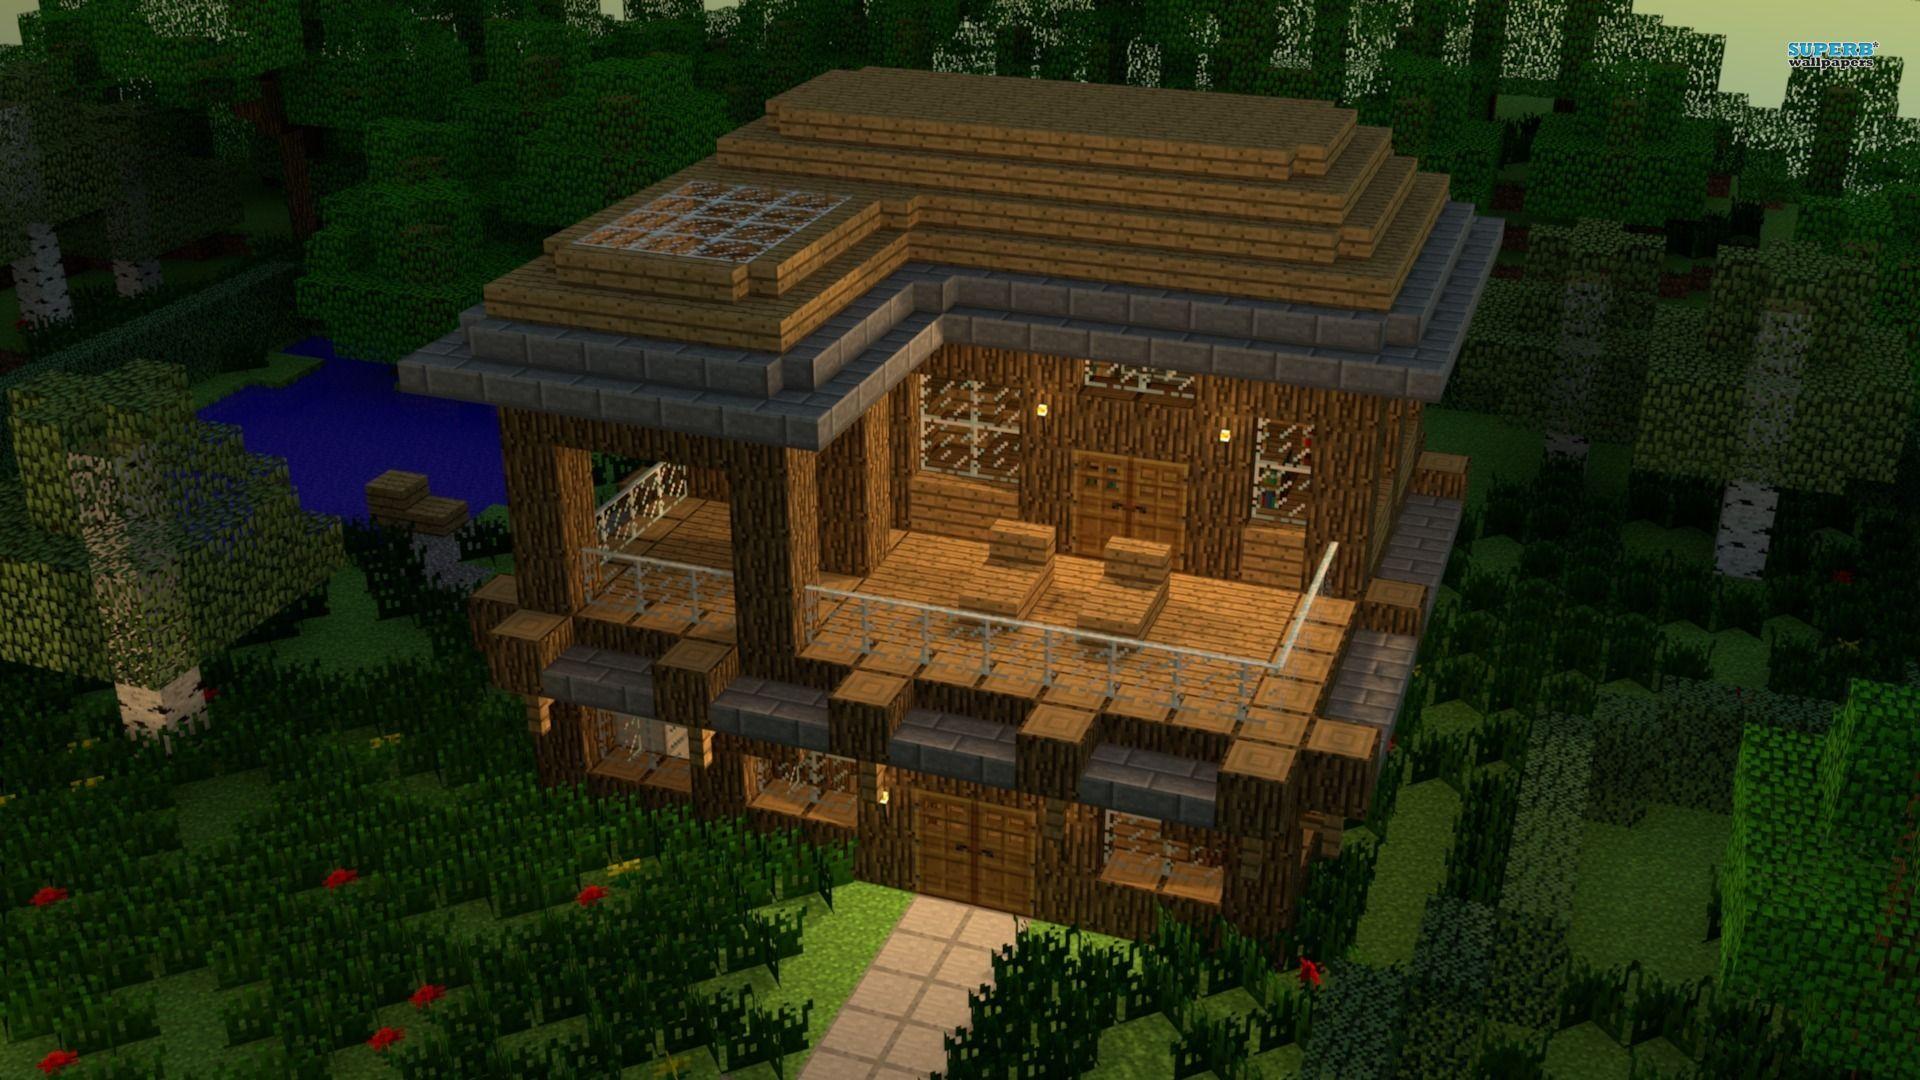 Minecraft House. House in minecraft wallpaper wallpaper